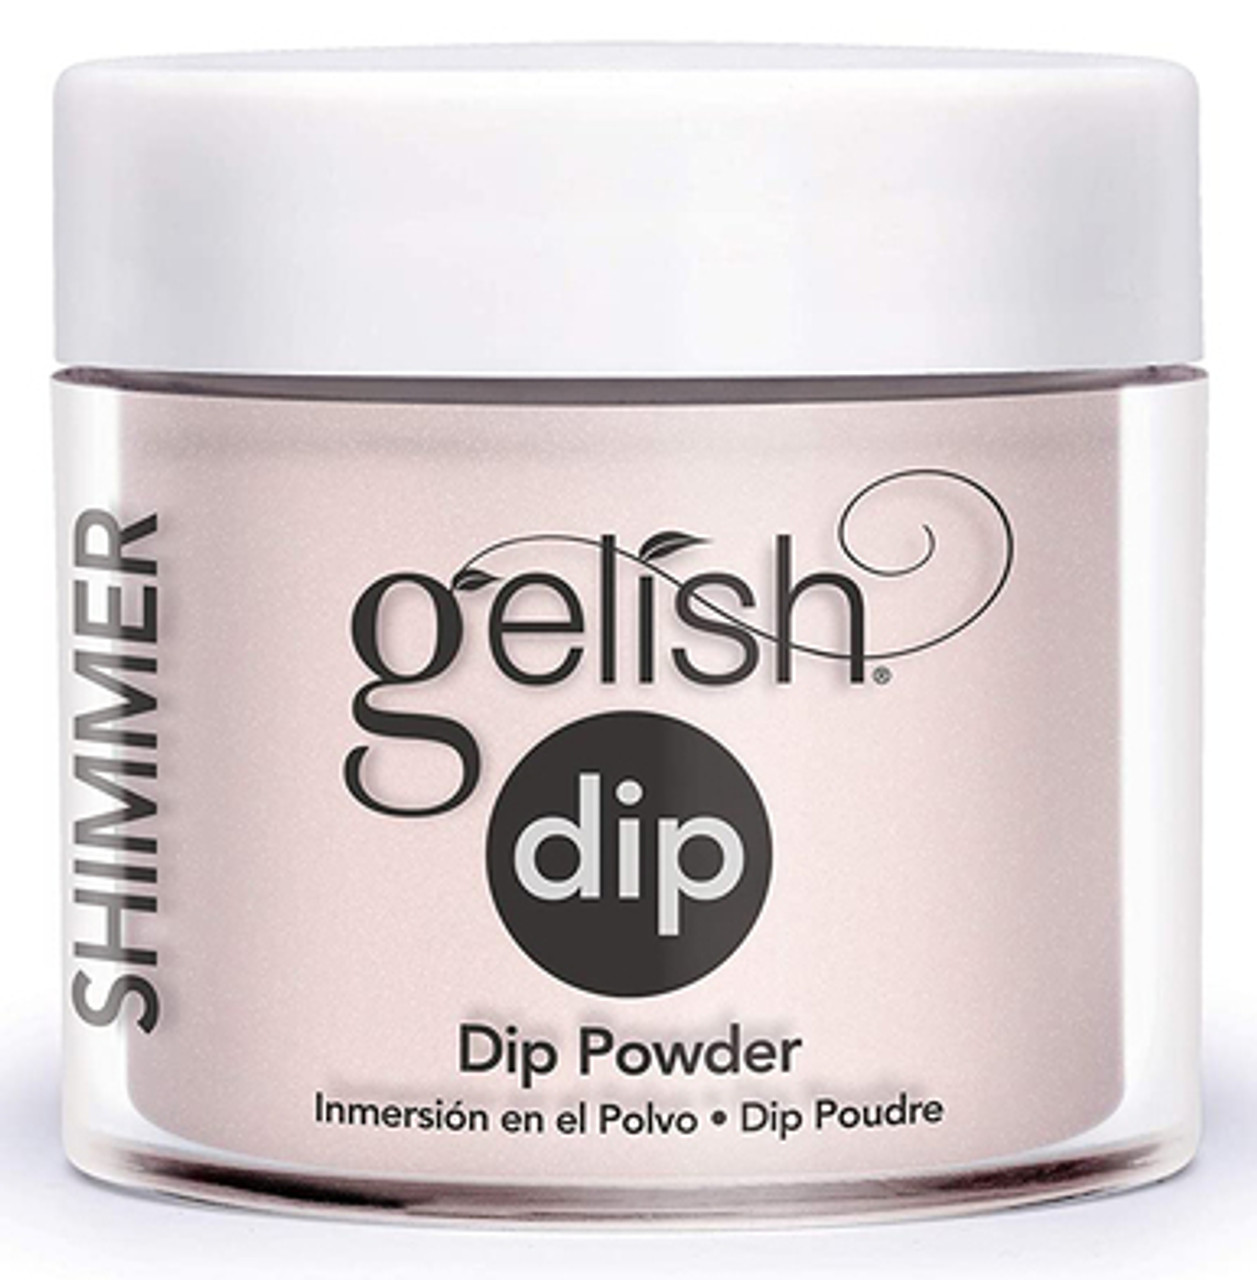 Gelish Dip Powder Tan My Hide Nude - 0.8 oz / 23 g